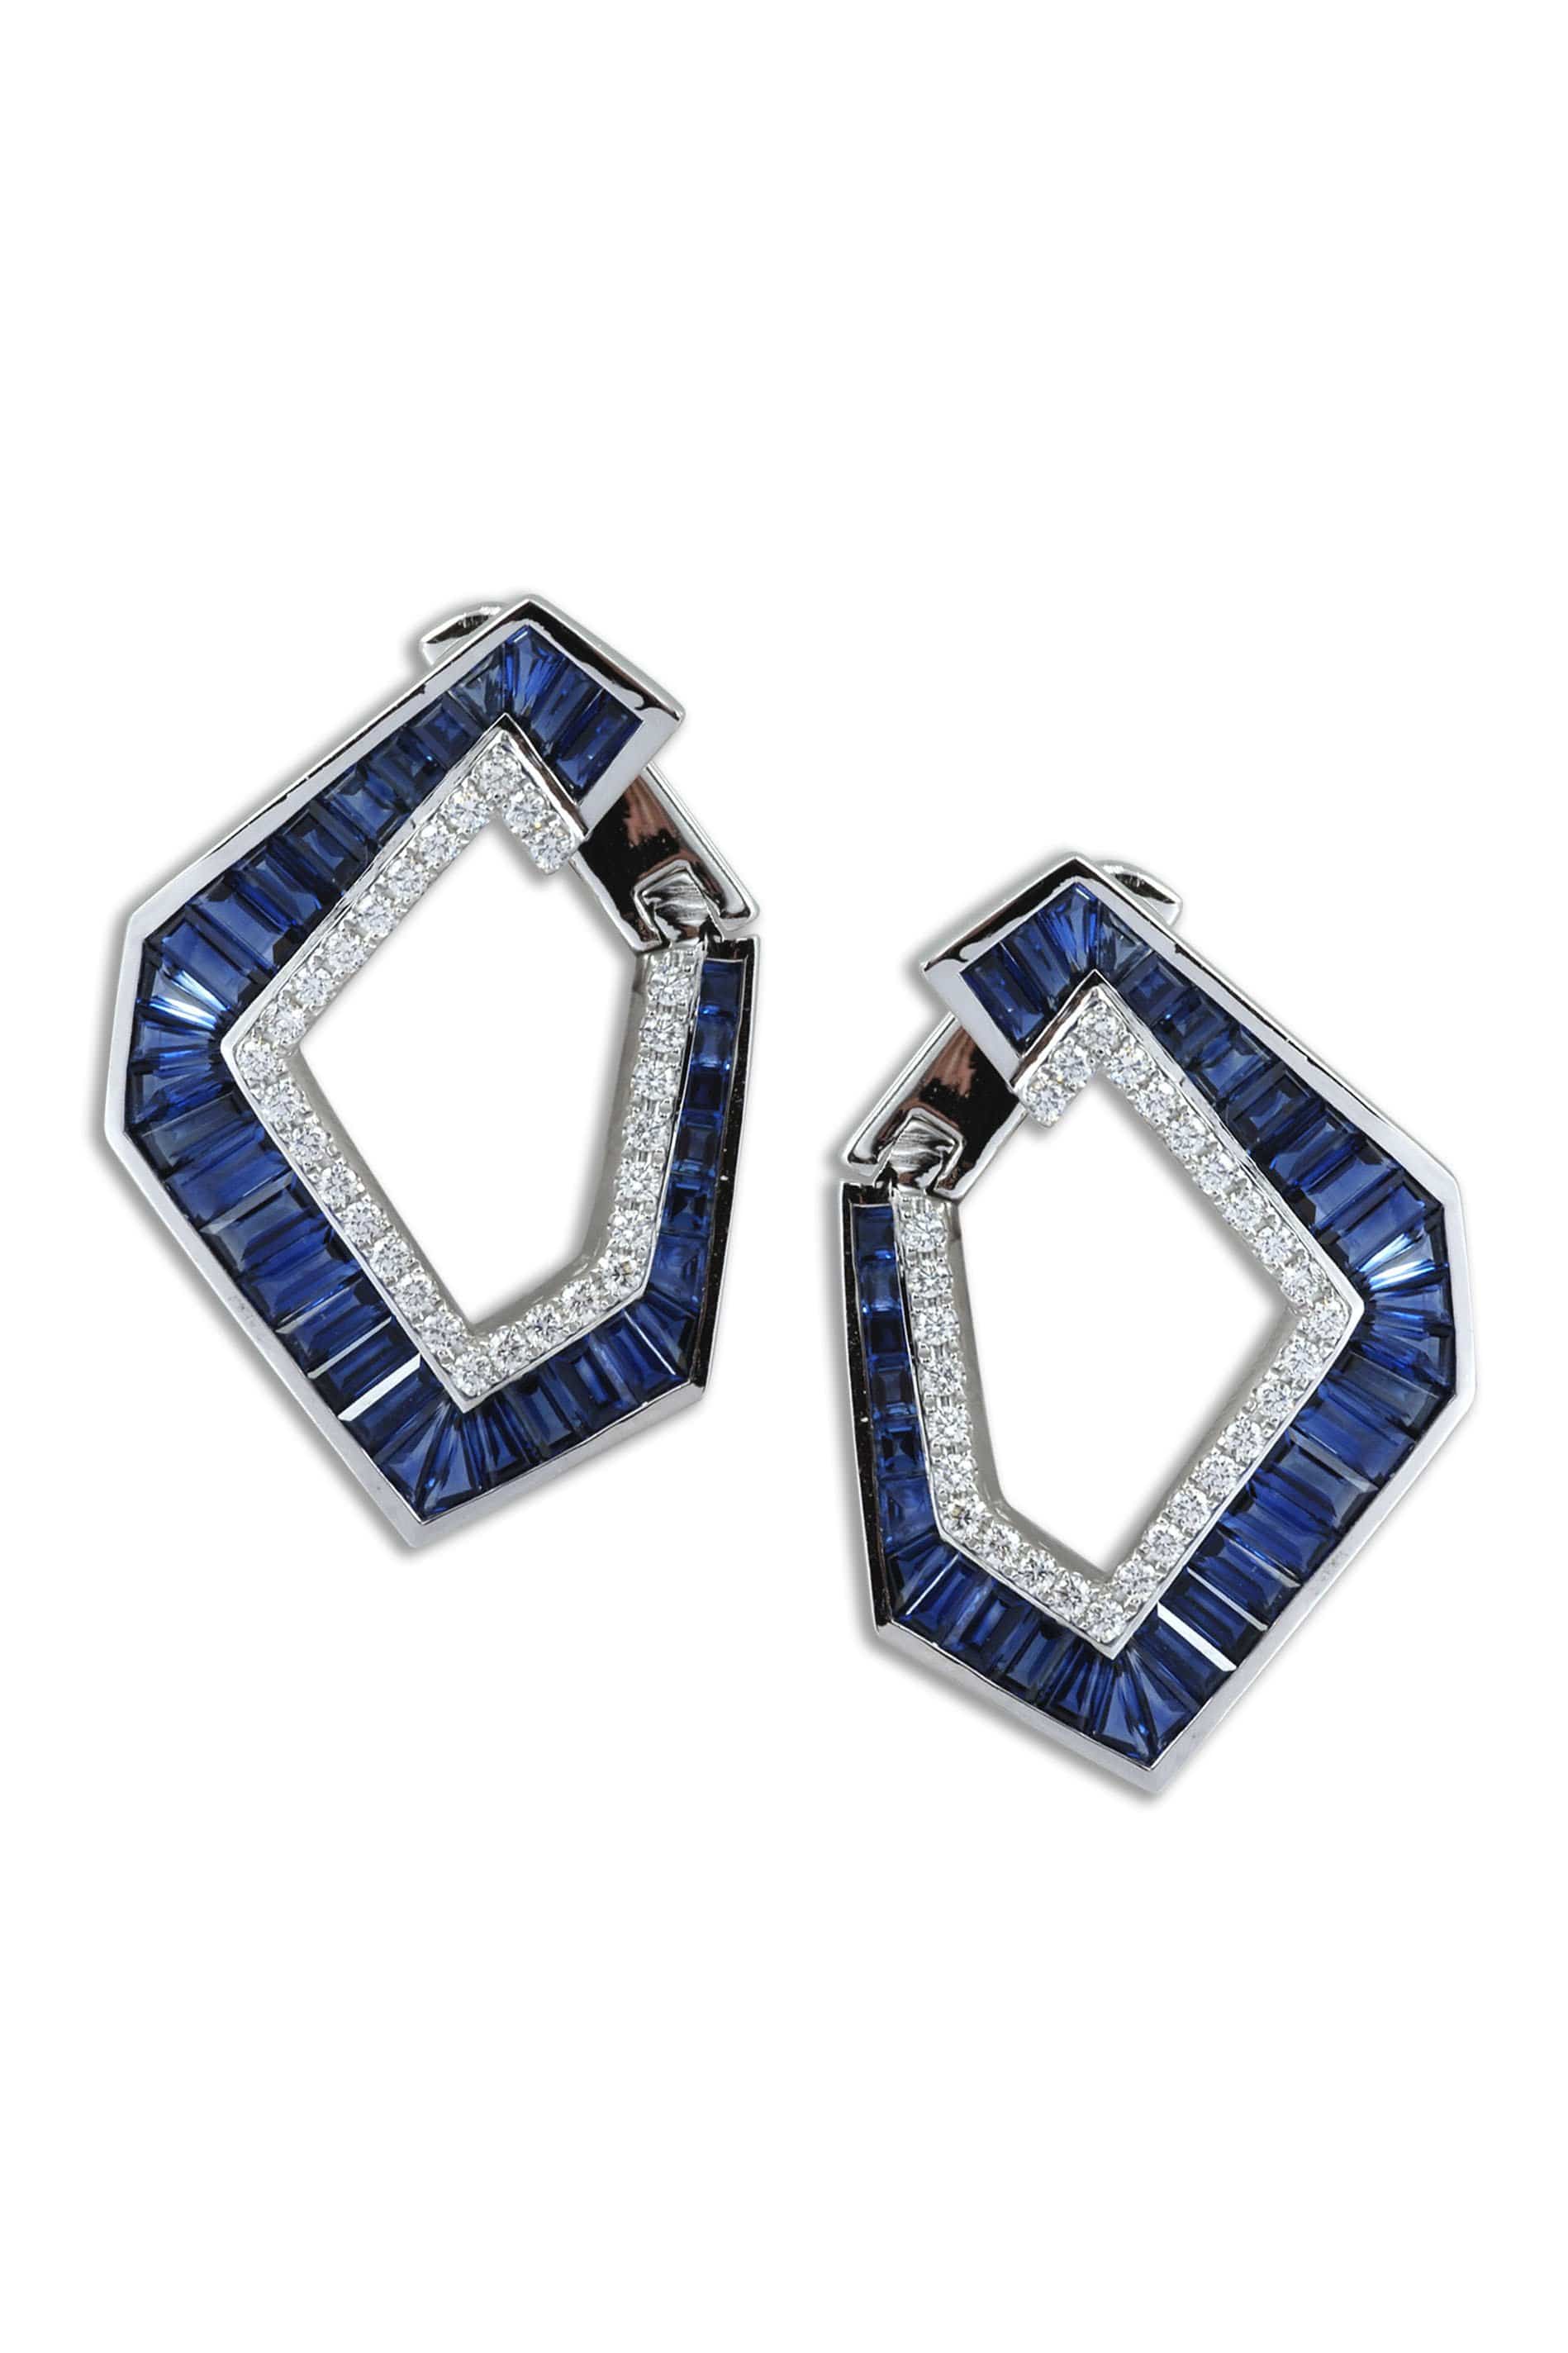 KAVANT & SHARART-Origami Link No. 5 Blue Sapphire Earrings-WHITE GOLD